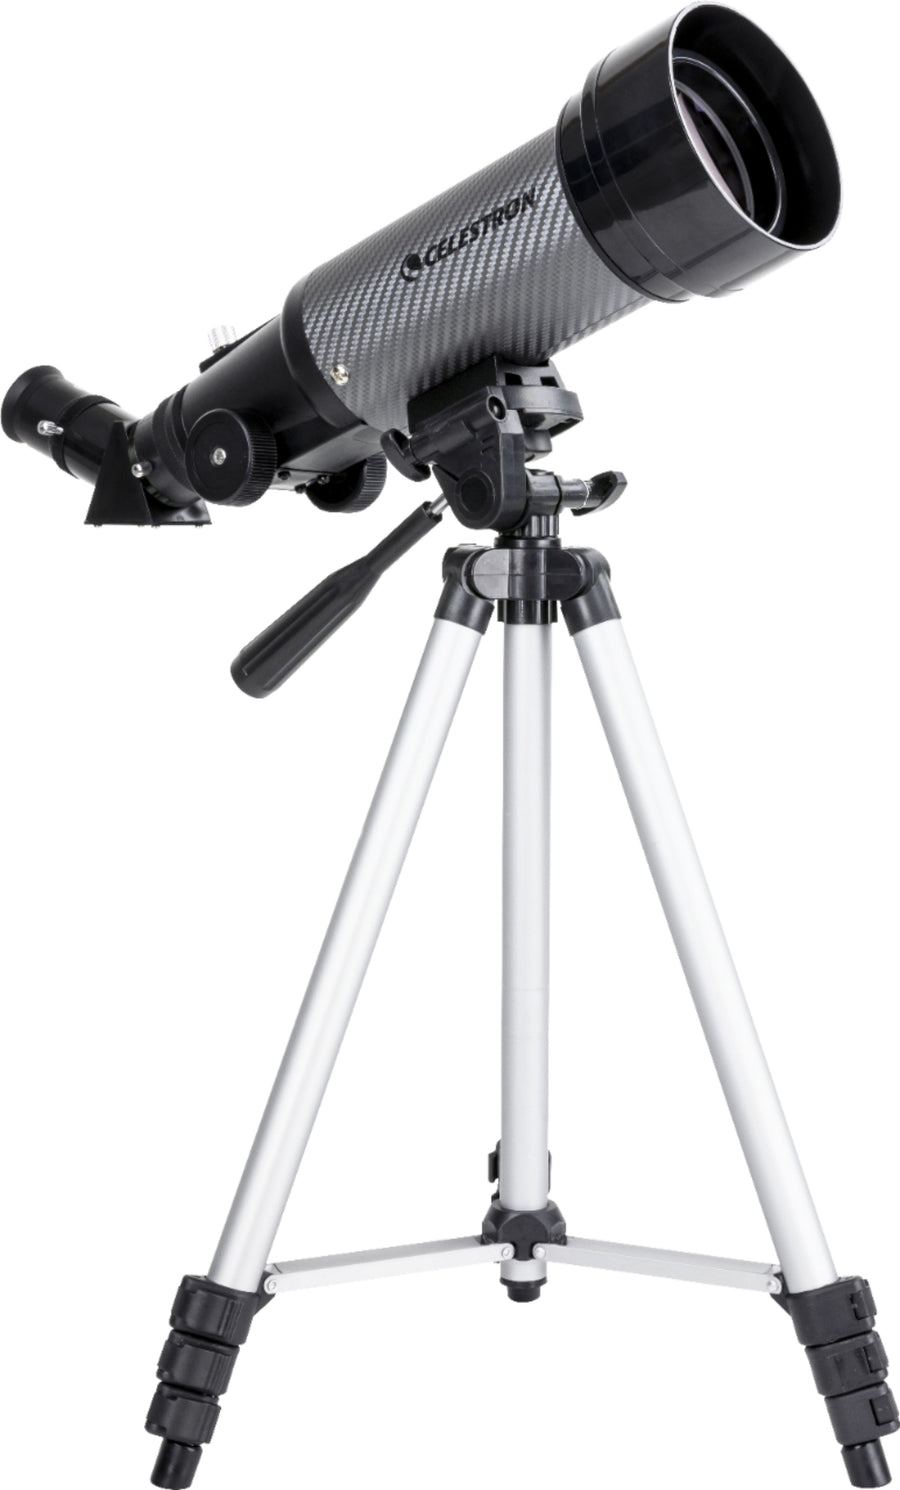 Celestron - Travel Scope 70mm Refractor Telescope - Gray/Black_0